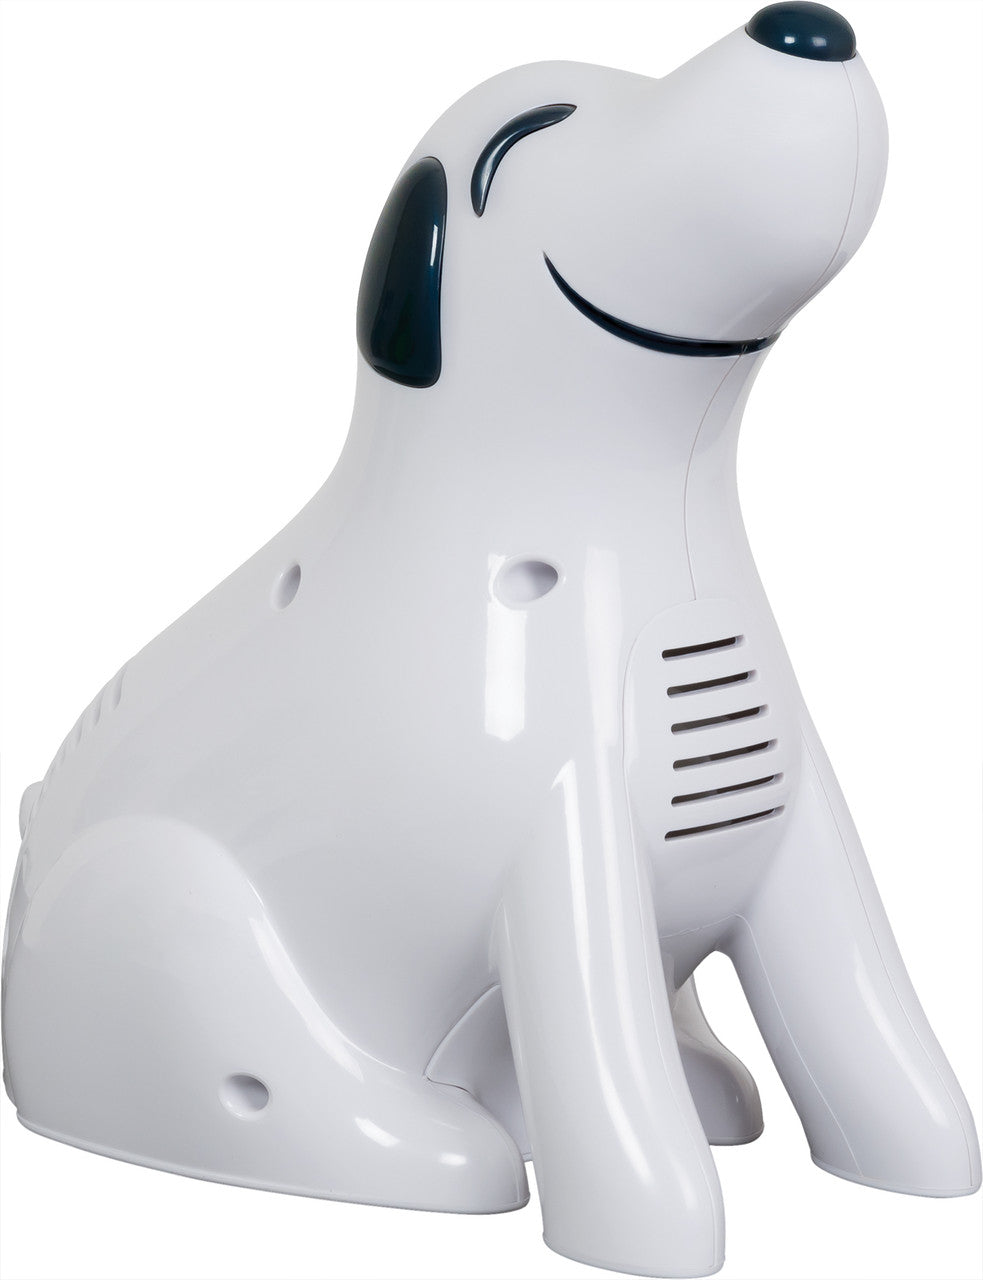 Roscoe Medical Pediatric Dog Nebulizer Compressor System